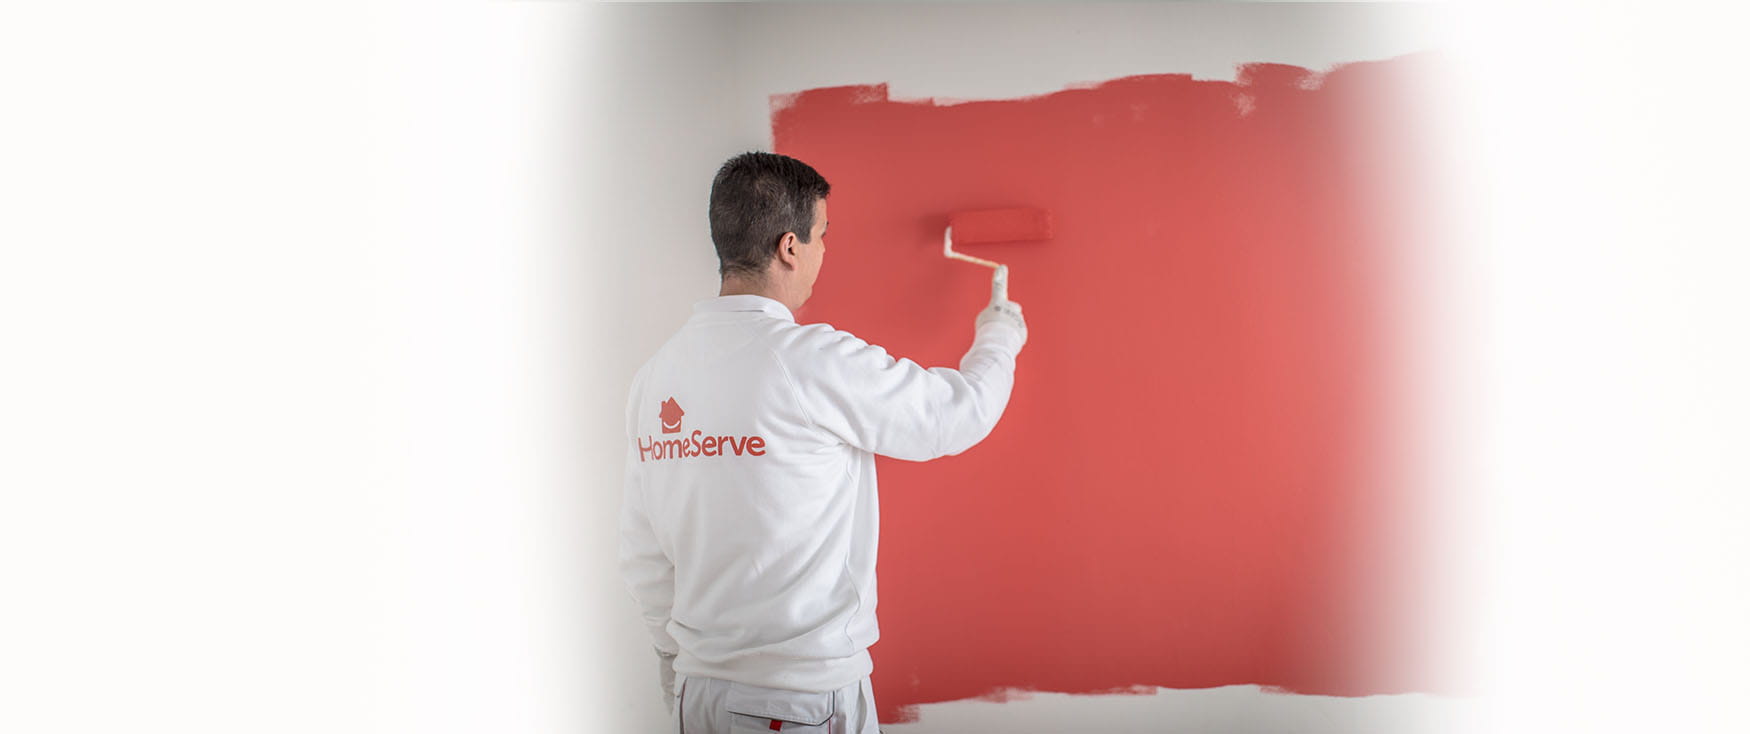 Pintor de HomeServe pintando una pared